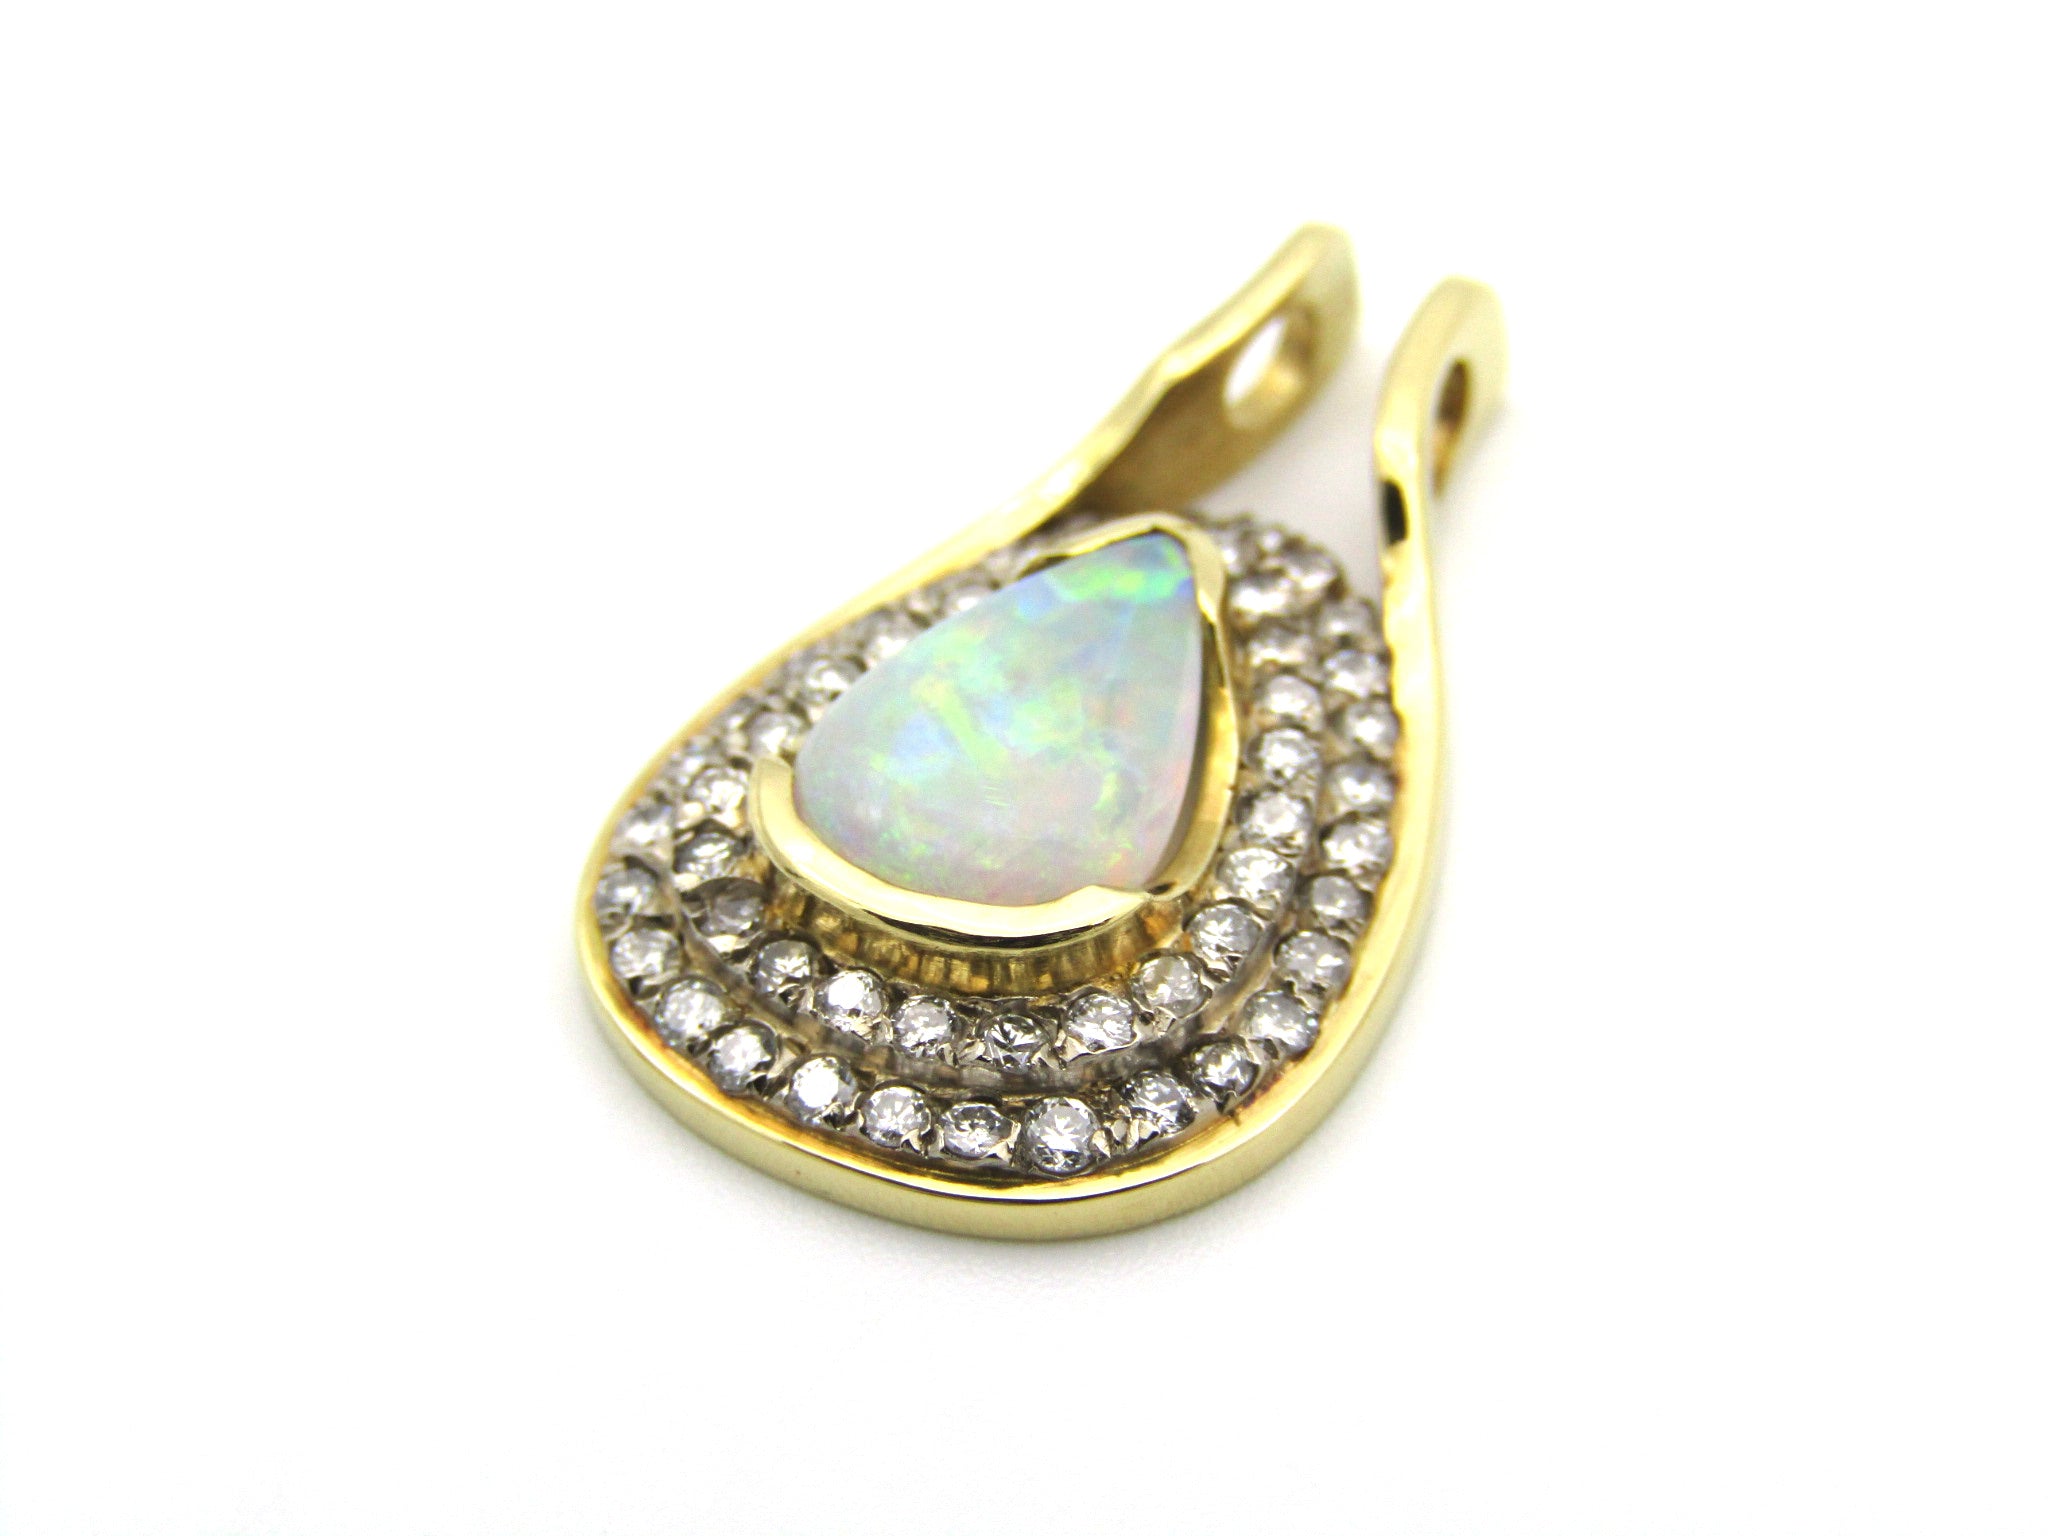 18K gold opal and diamond pendant.